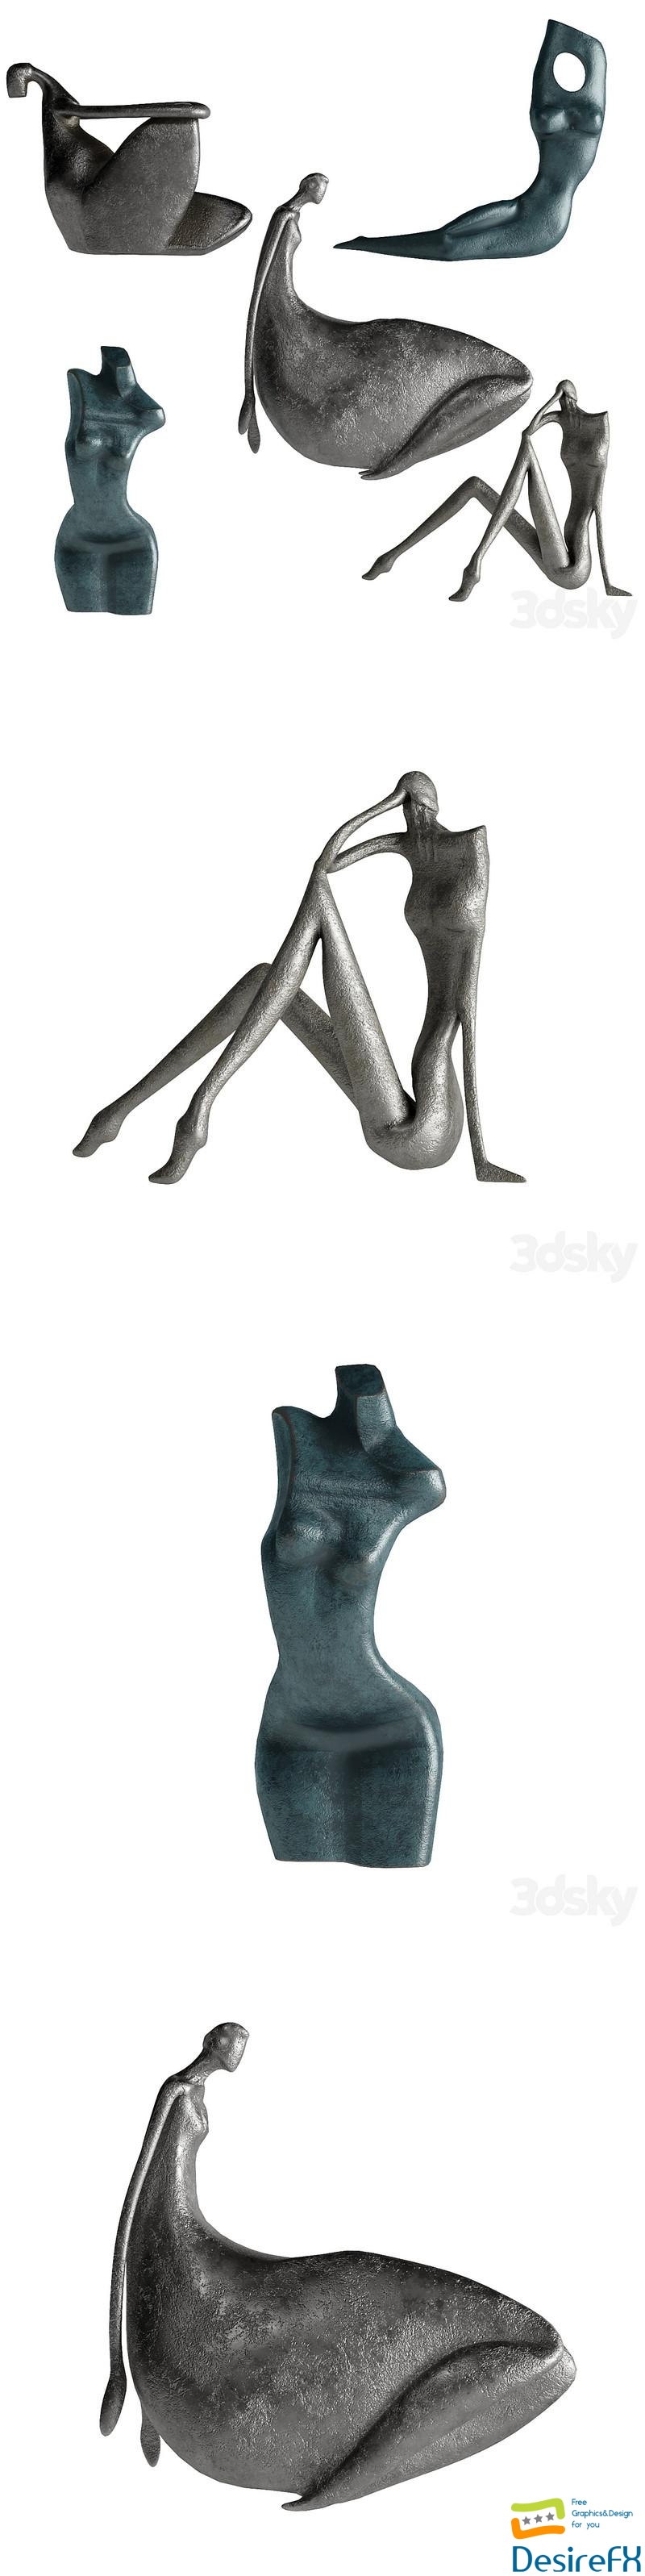 Human Abstract Sculptures 7 3D Model